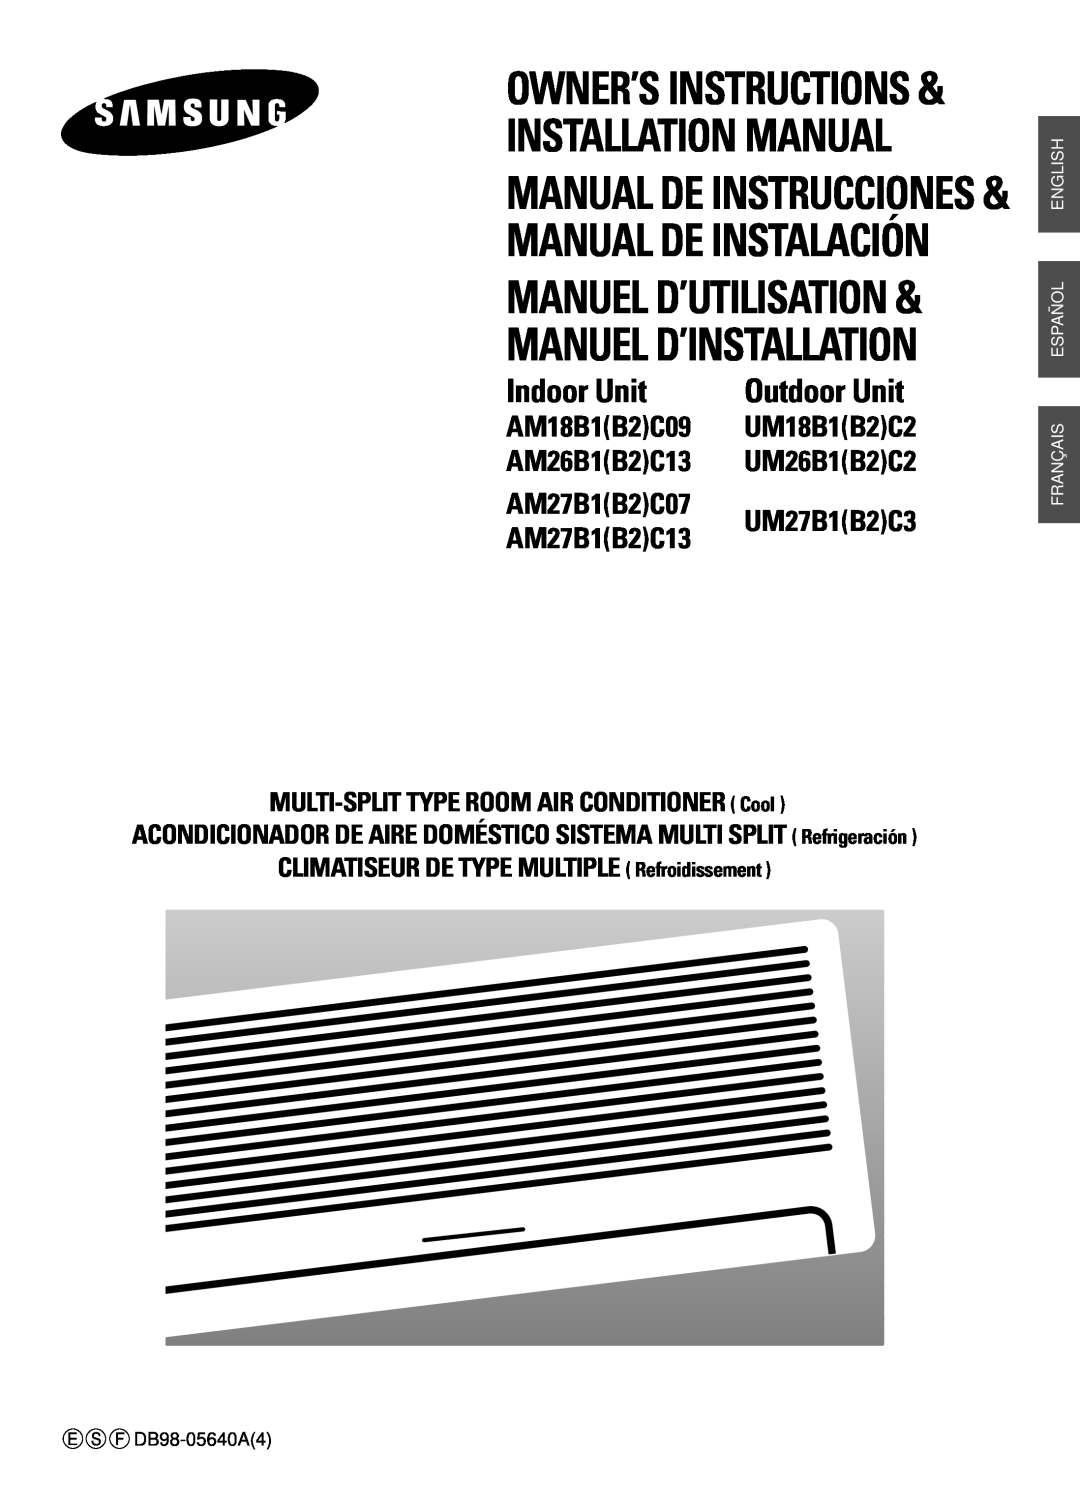 Samsung AM18B1(B2)C09 installation manual Installation Manual Manual De Instrucciones, Owner’S Instructions, Indoor Unit 